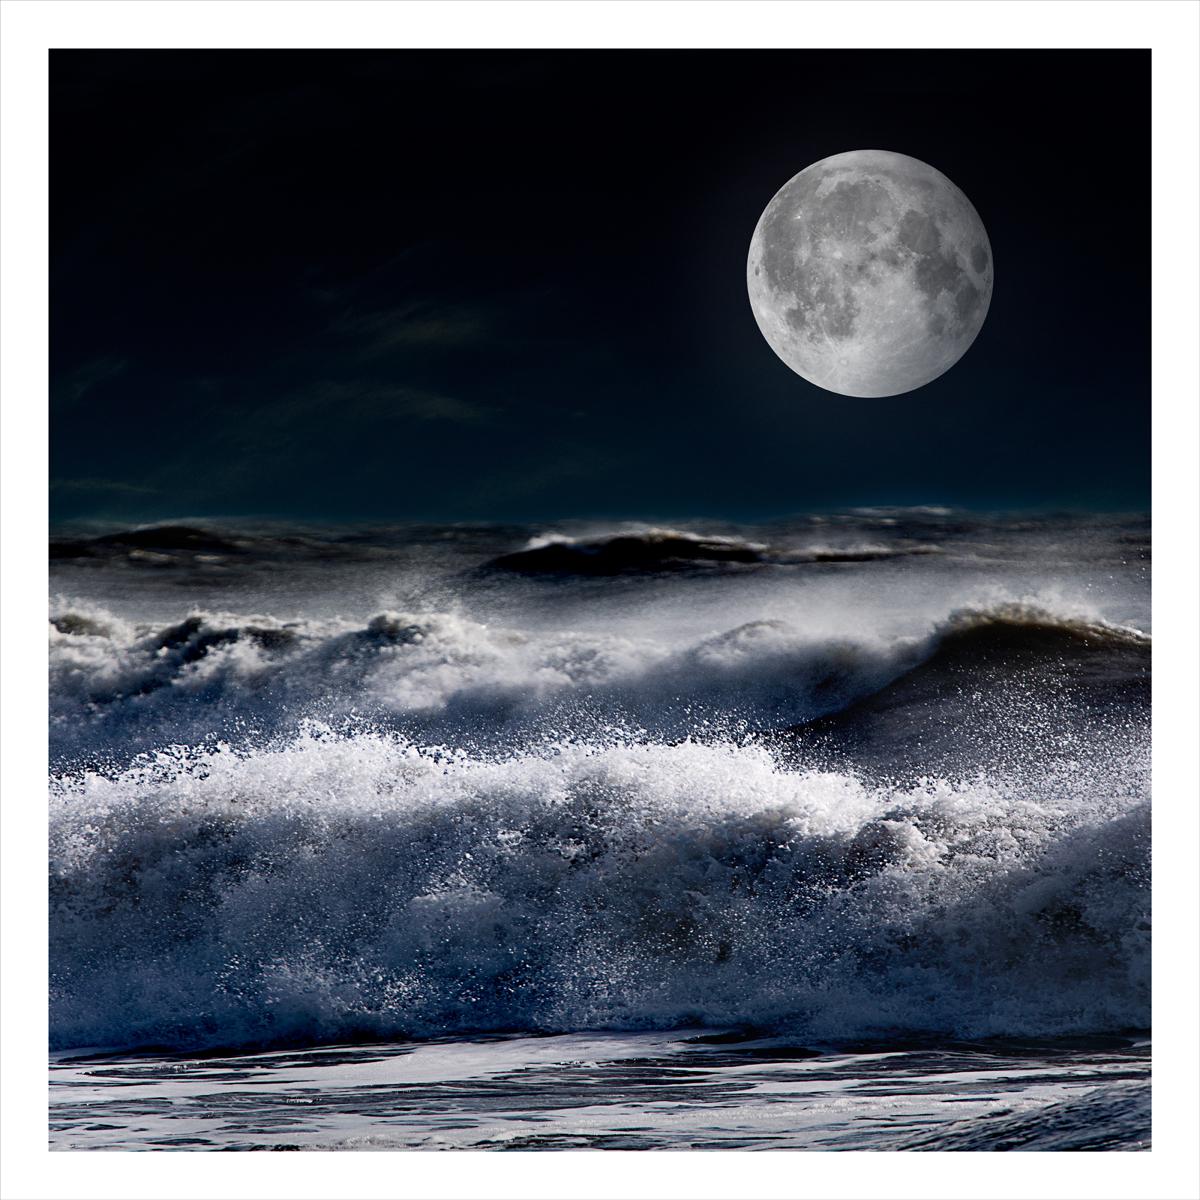 Moon #25 - Photograph by Bob Tabor